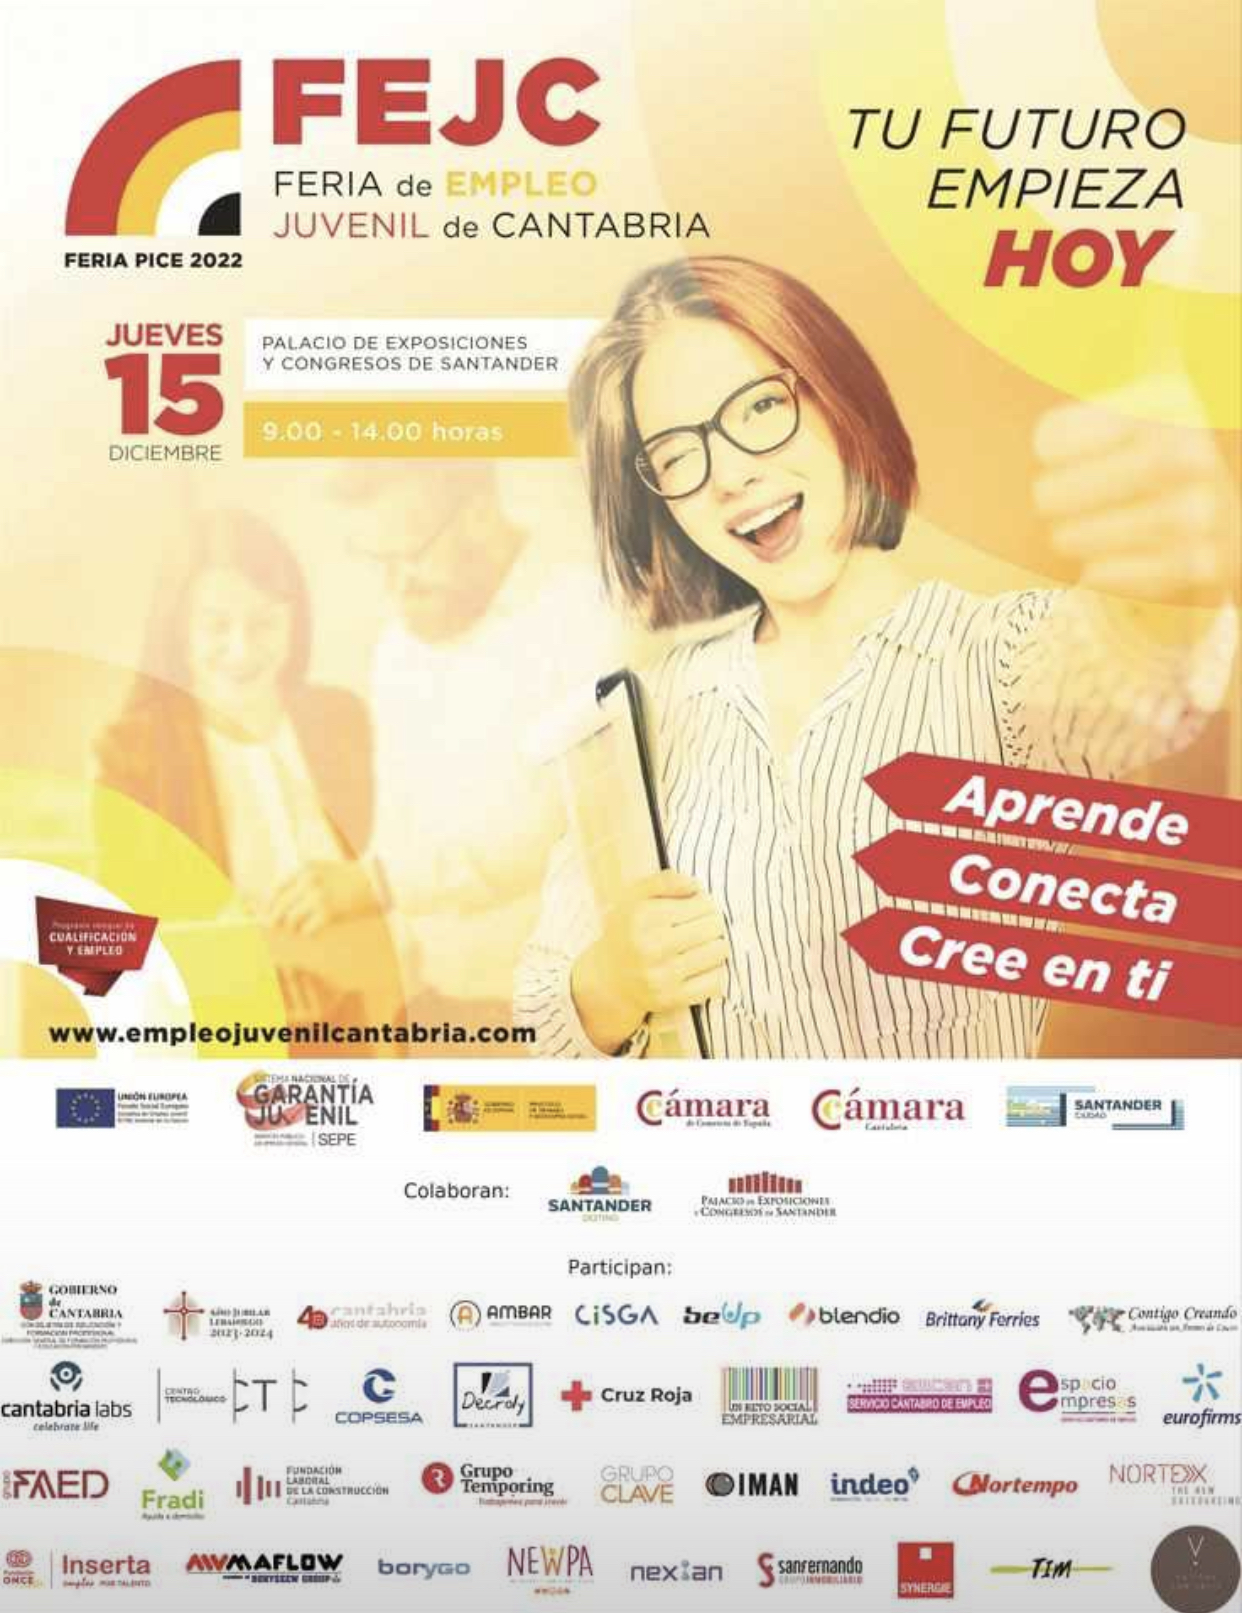 Feria de Empleo Juvenil de Cantabria 2022